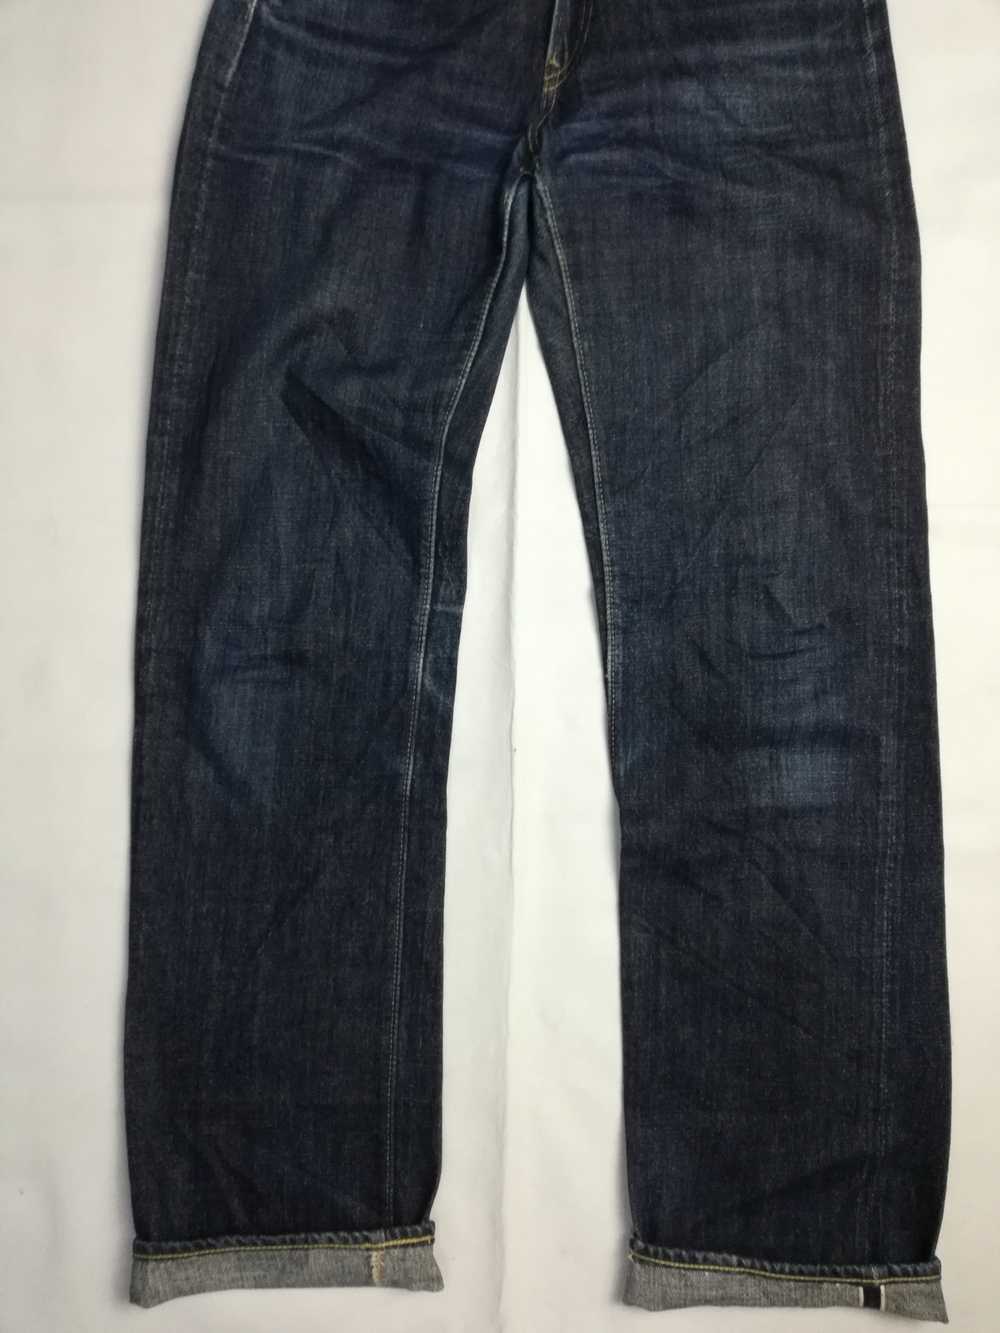 Orslow Orslow Selvedge Denim Jeans - image 4